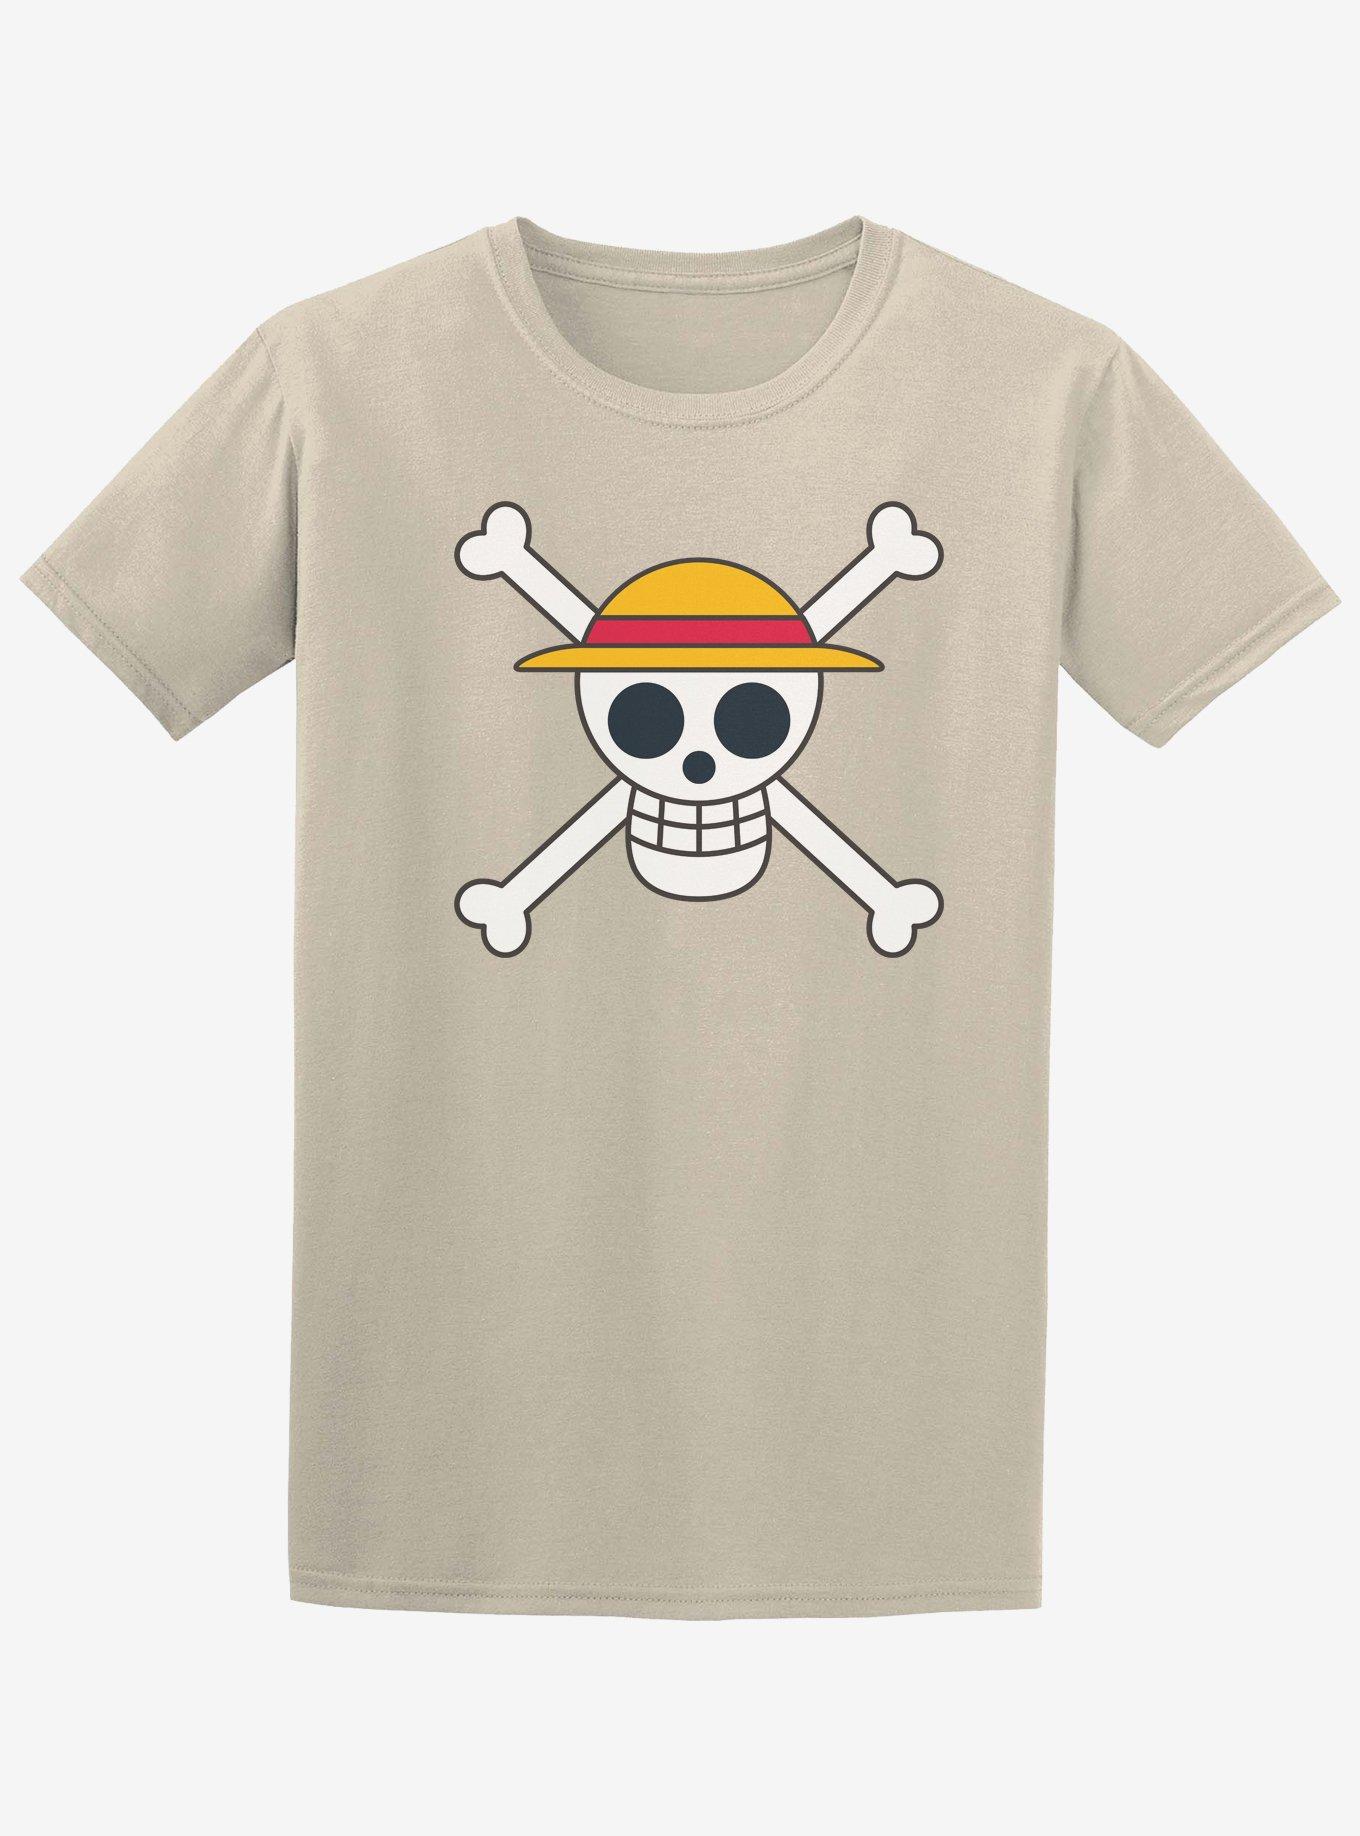 Monkey D. Luffy T-shirt Straw hat One Piece, T-shirt, hat, piracy